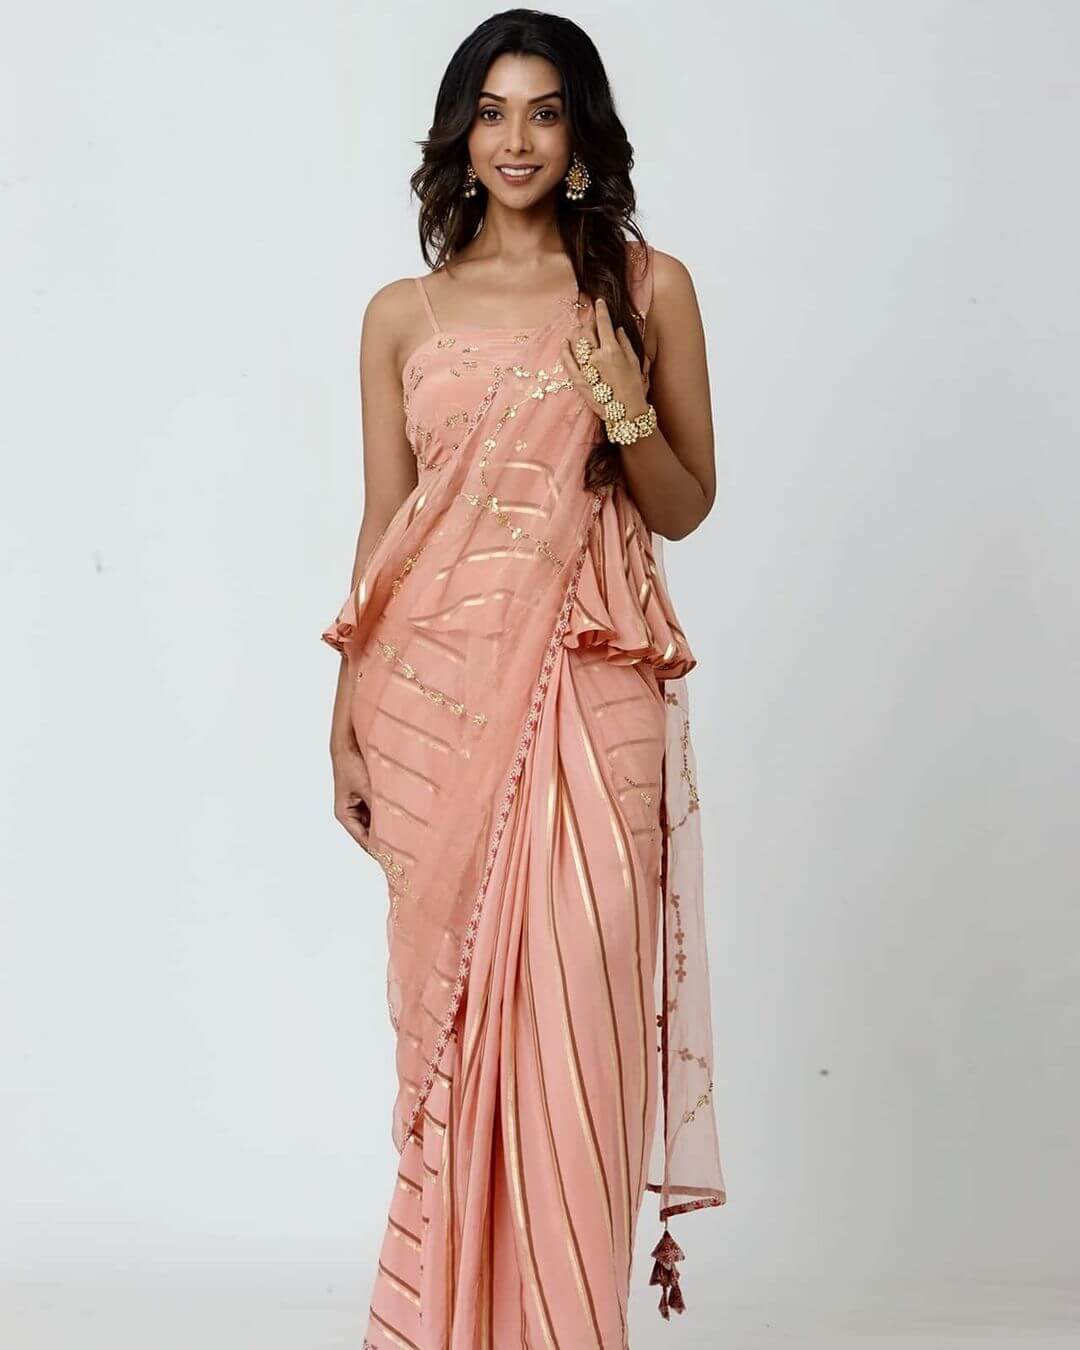 Anupriya Goenka Graceful Look In Pink Saree Outfit Anupriya Goenka Graceful Looks And Outfit